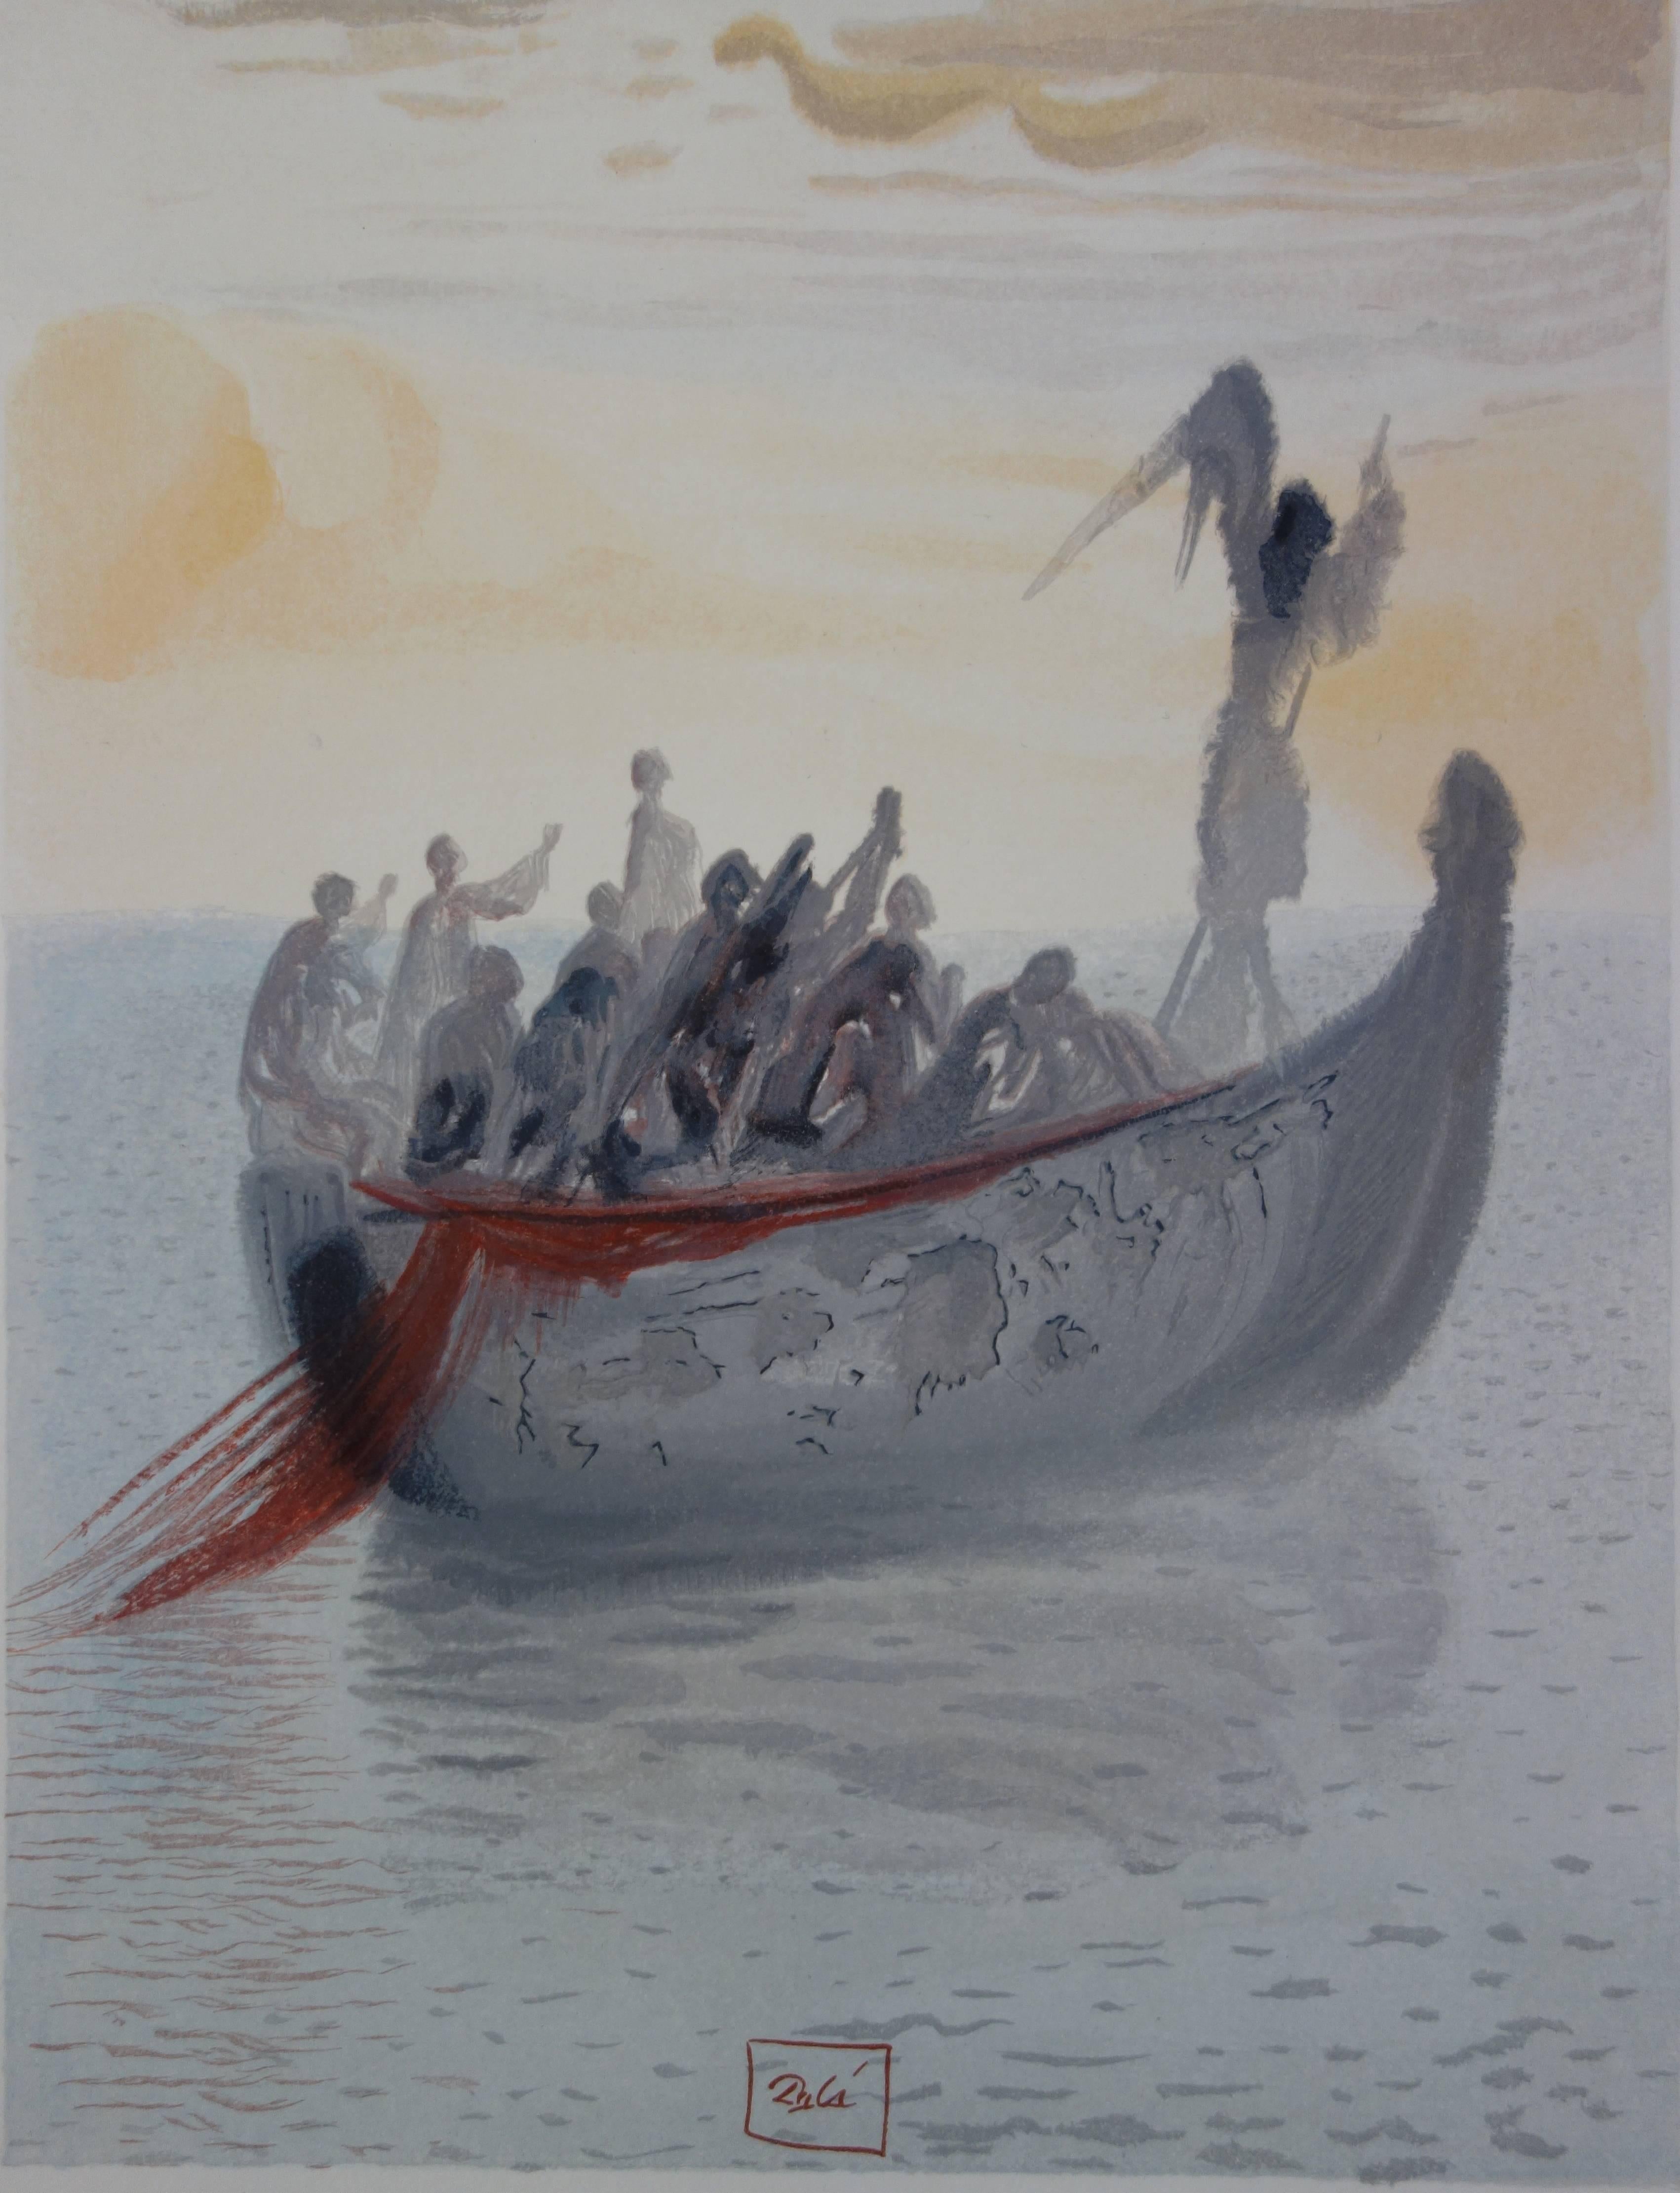 Purgatory 2 - The Ship of the Pilot - Original woodcut - 1963 - Surrealist Print by Salvador Dalí